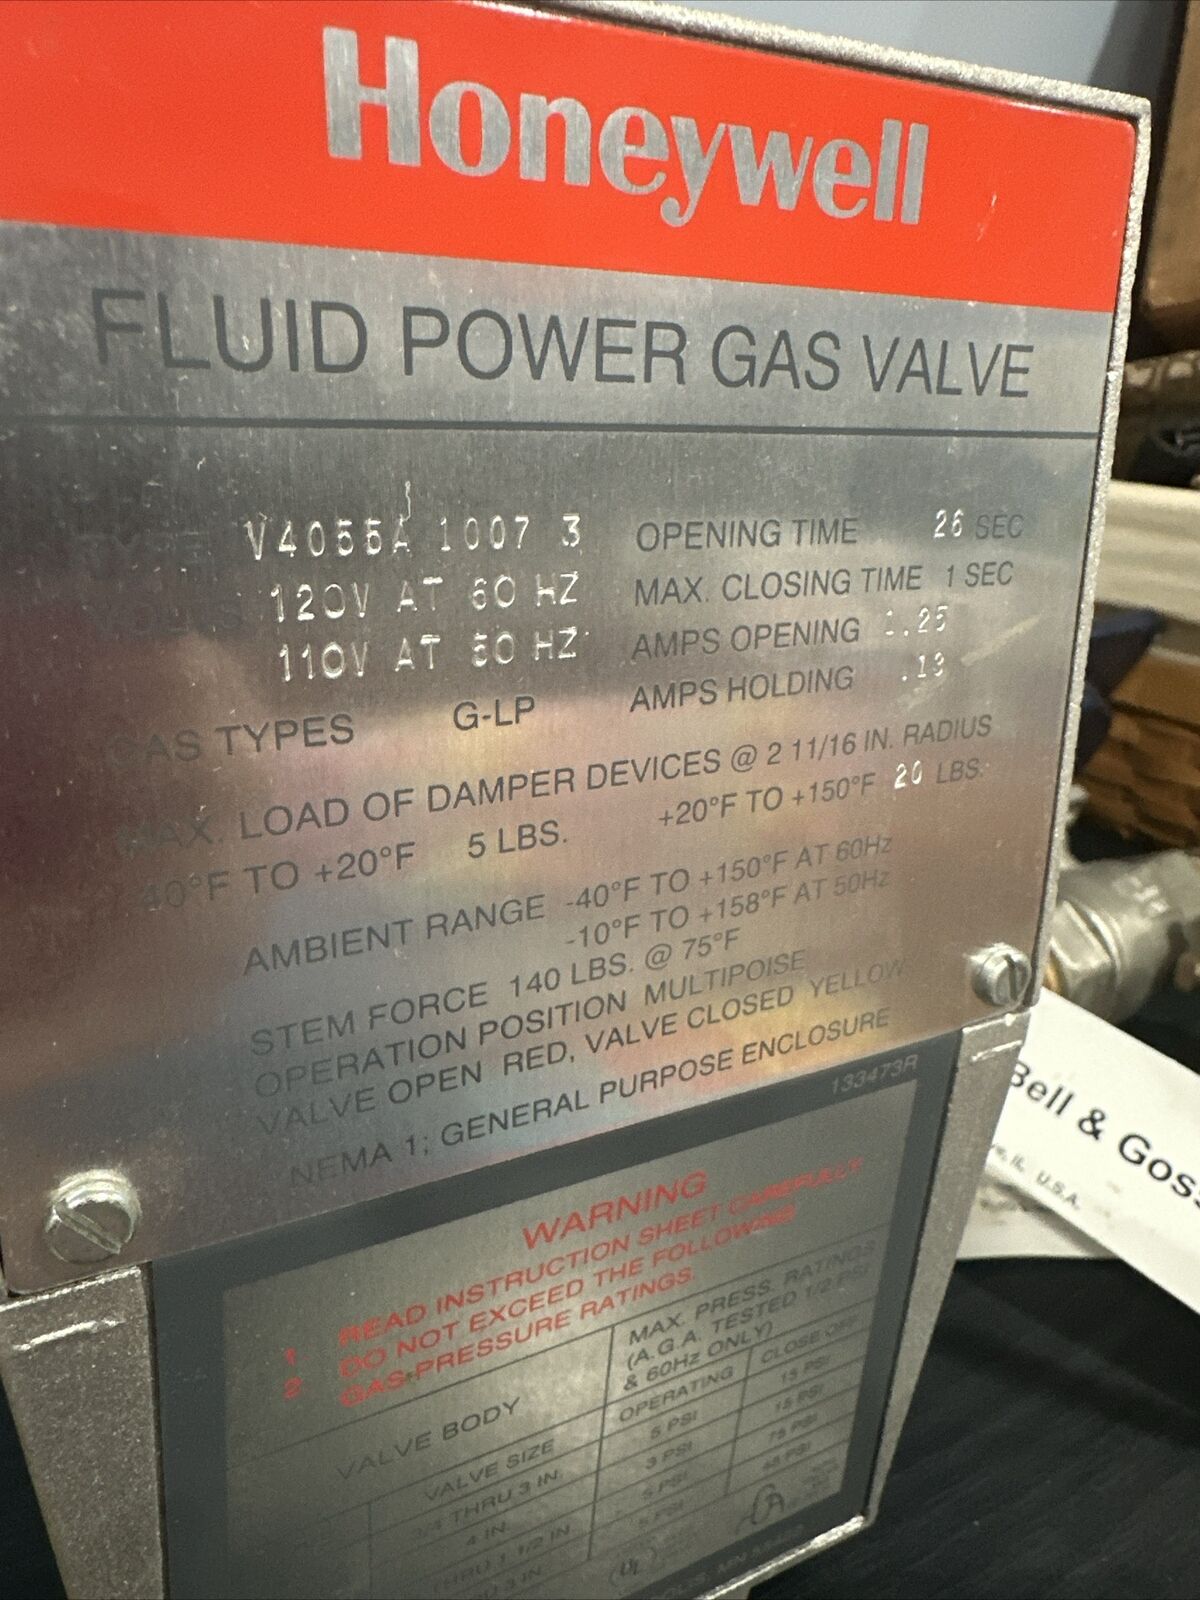 HONEYWELL FLUID POWER GAS VALVE, V4055D 1001